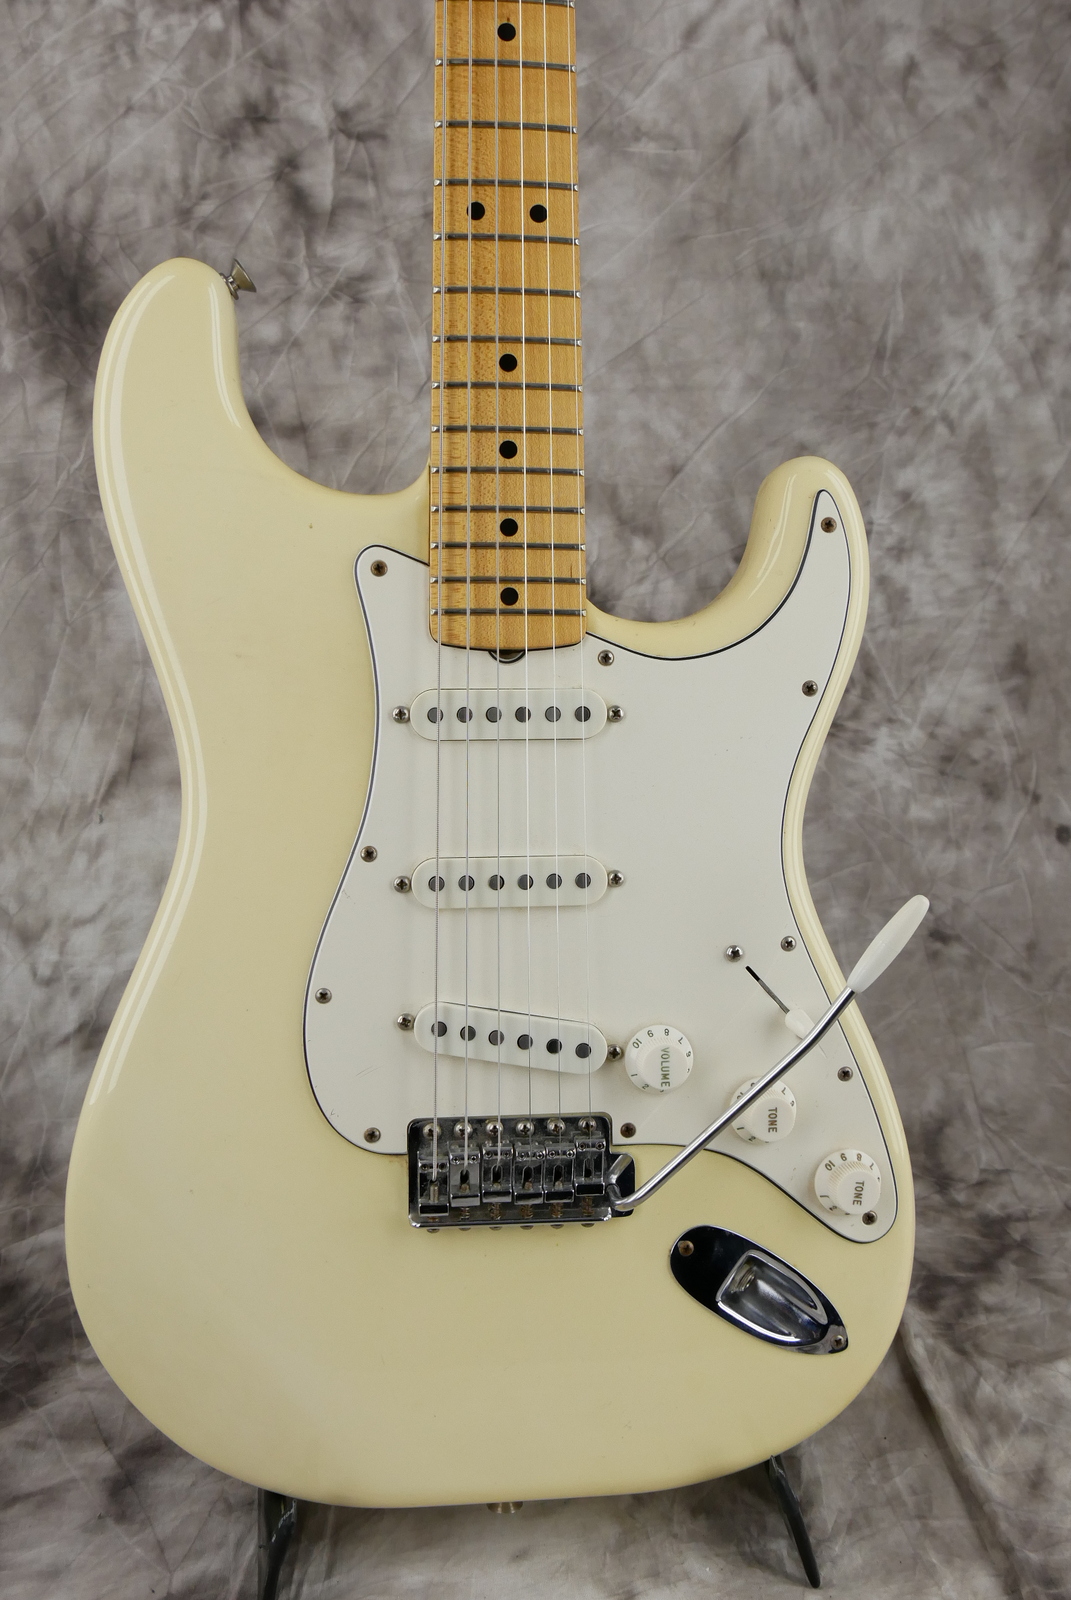 Fender_Stratocaster_Dan_smith_1982_tremolo_hardcase-003.JPG